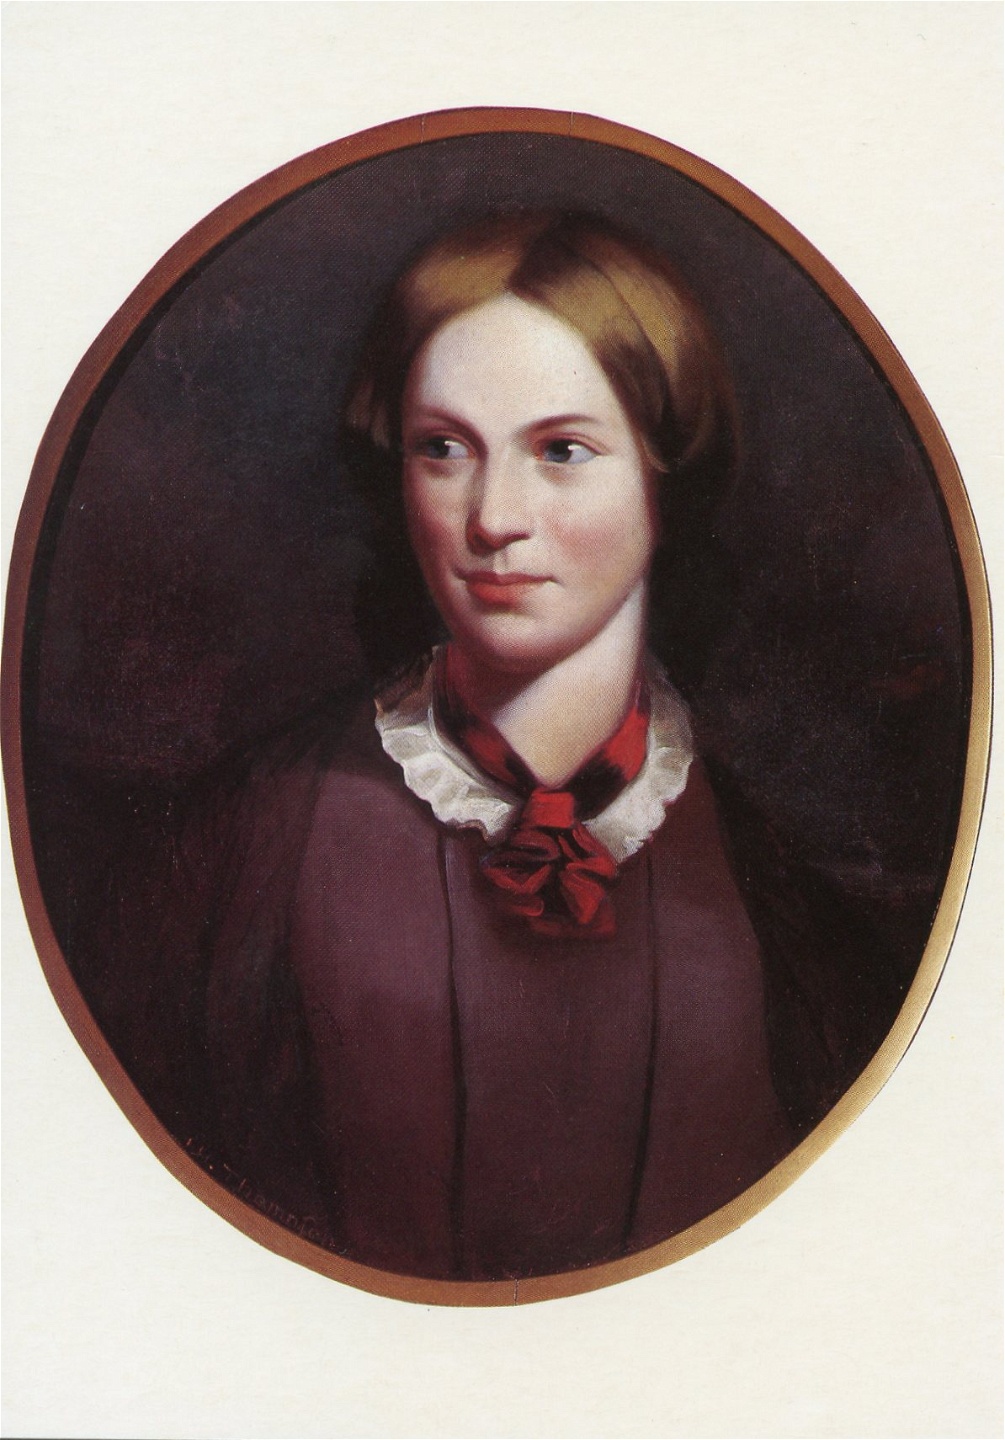 Porträtt av Charlotte Brontë målat av J. H. Thompson.